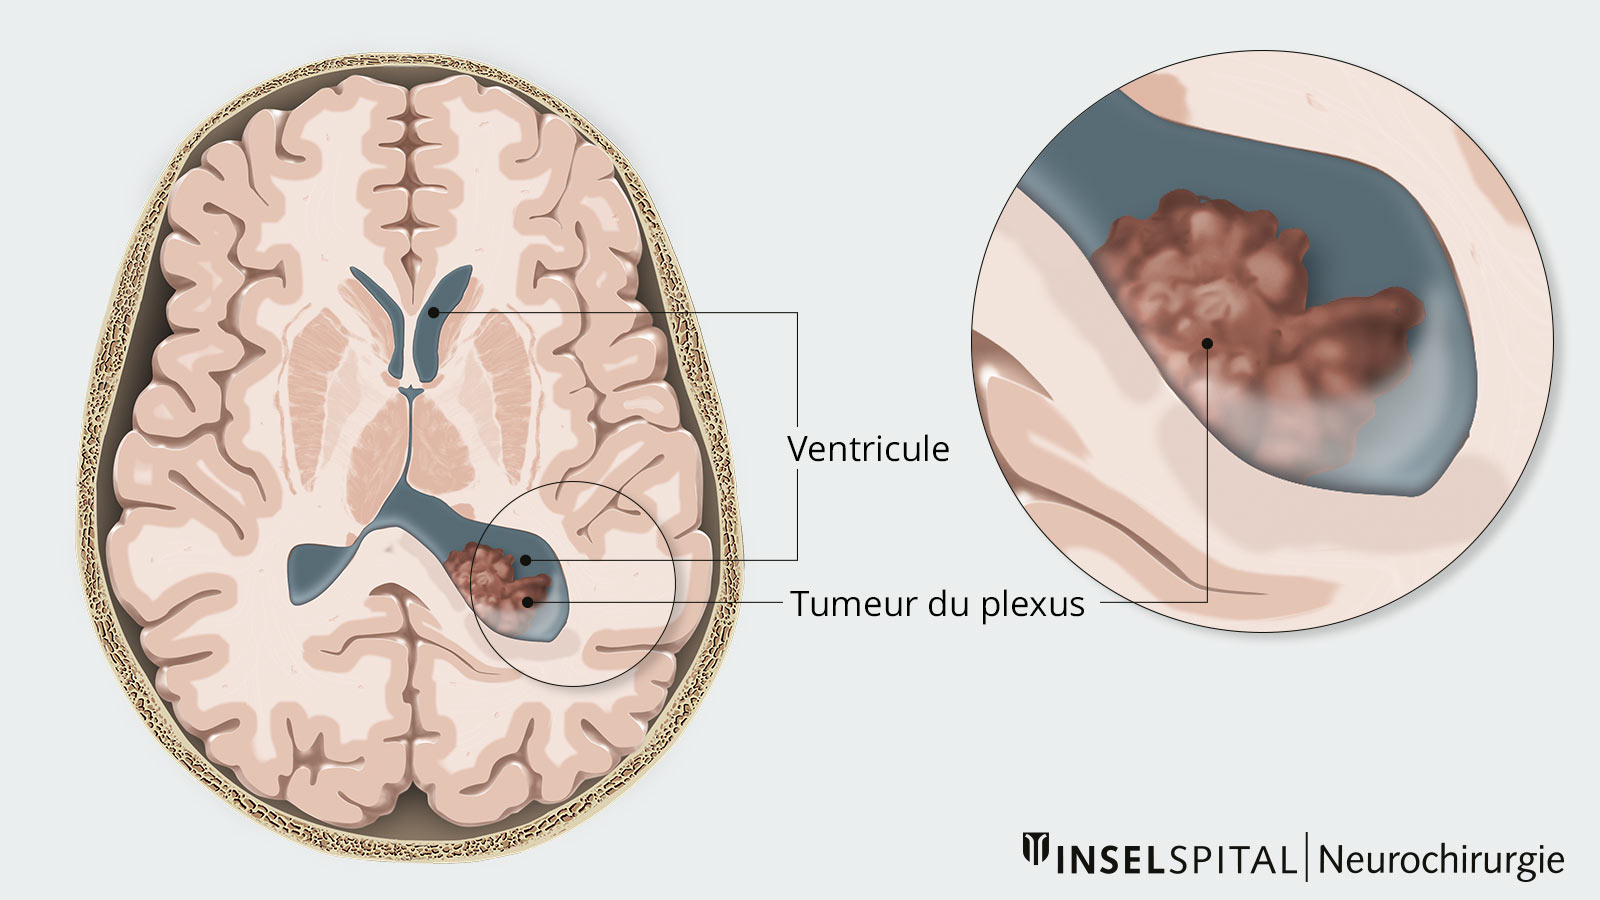 Tumeur du plexus | Neurochirurgie Inselspital Bern